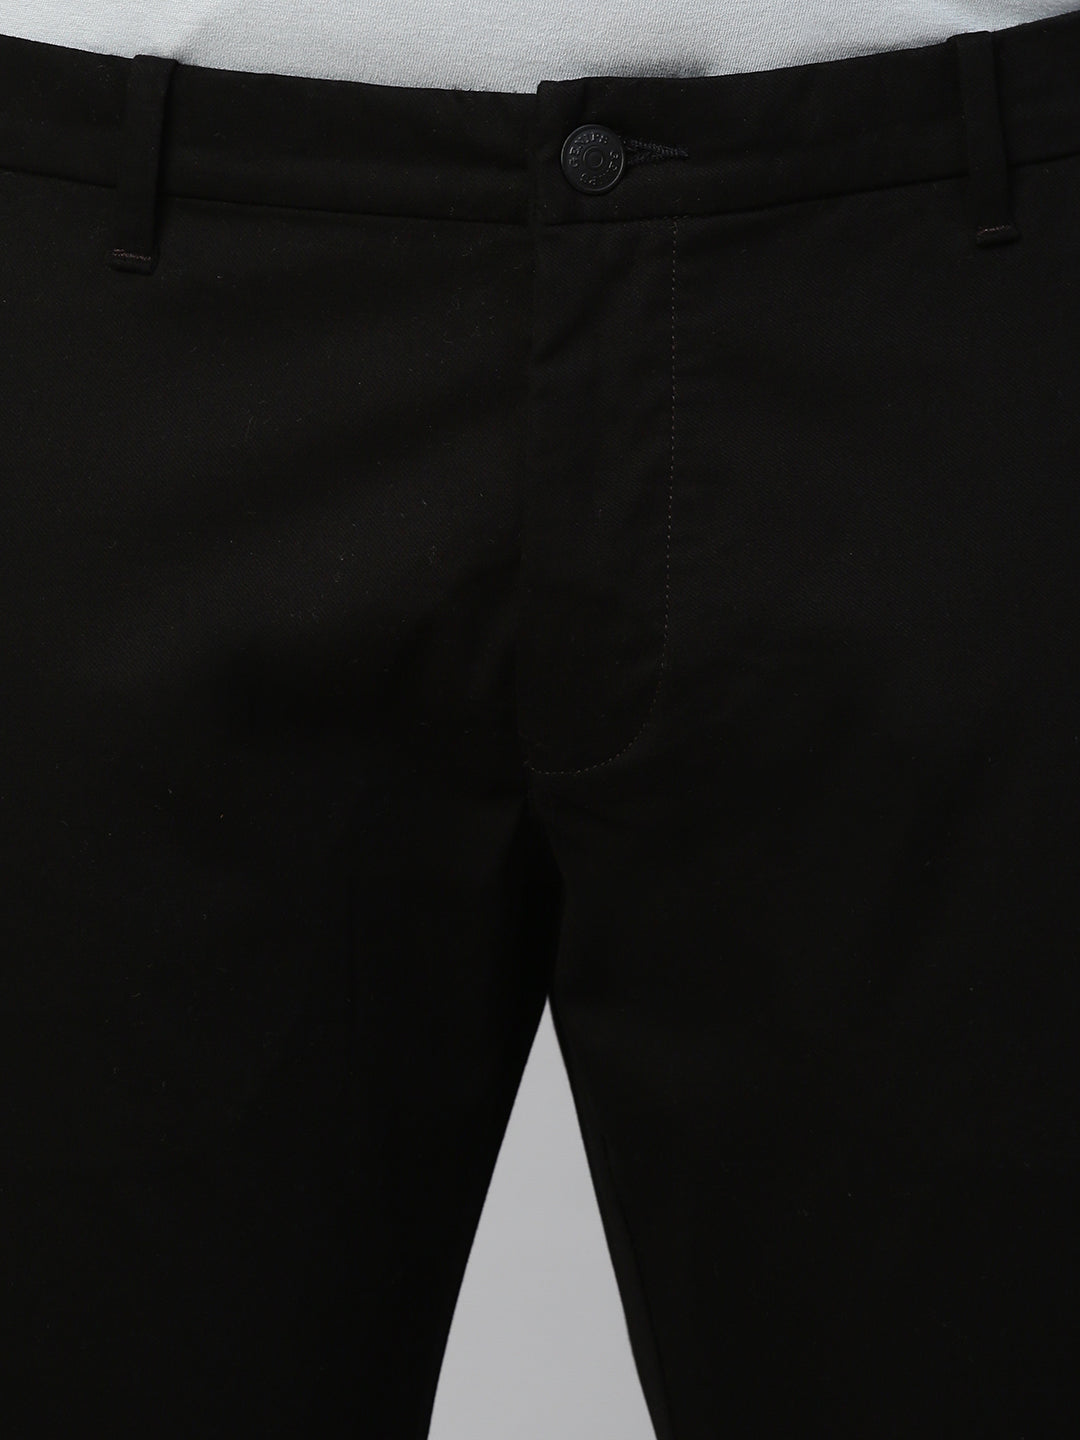 Genips Men's Black Cotton Stretch Caribbean Slim Fit Solid Trousers